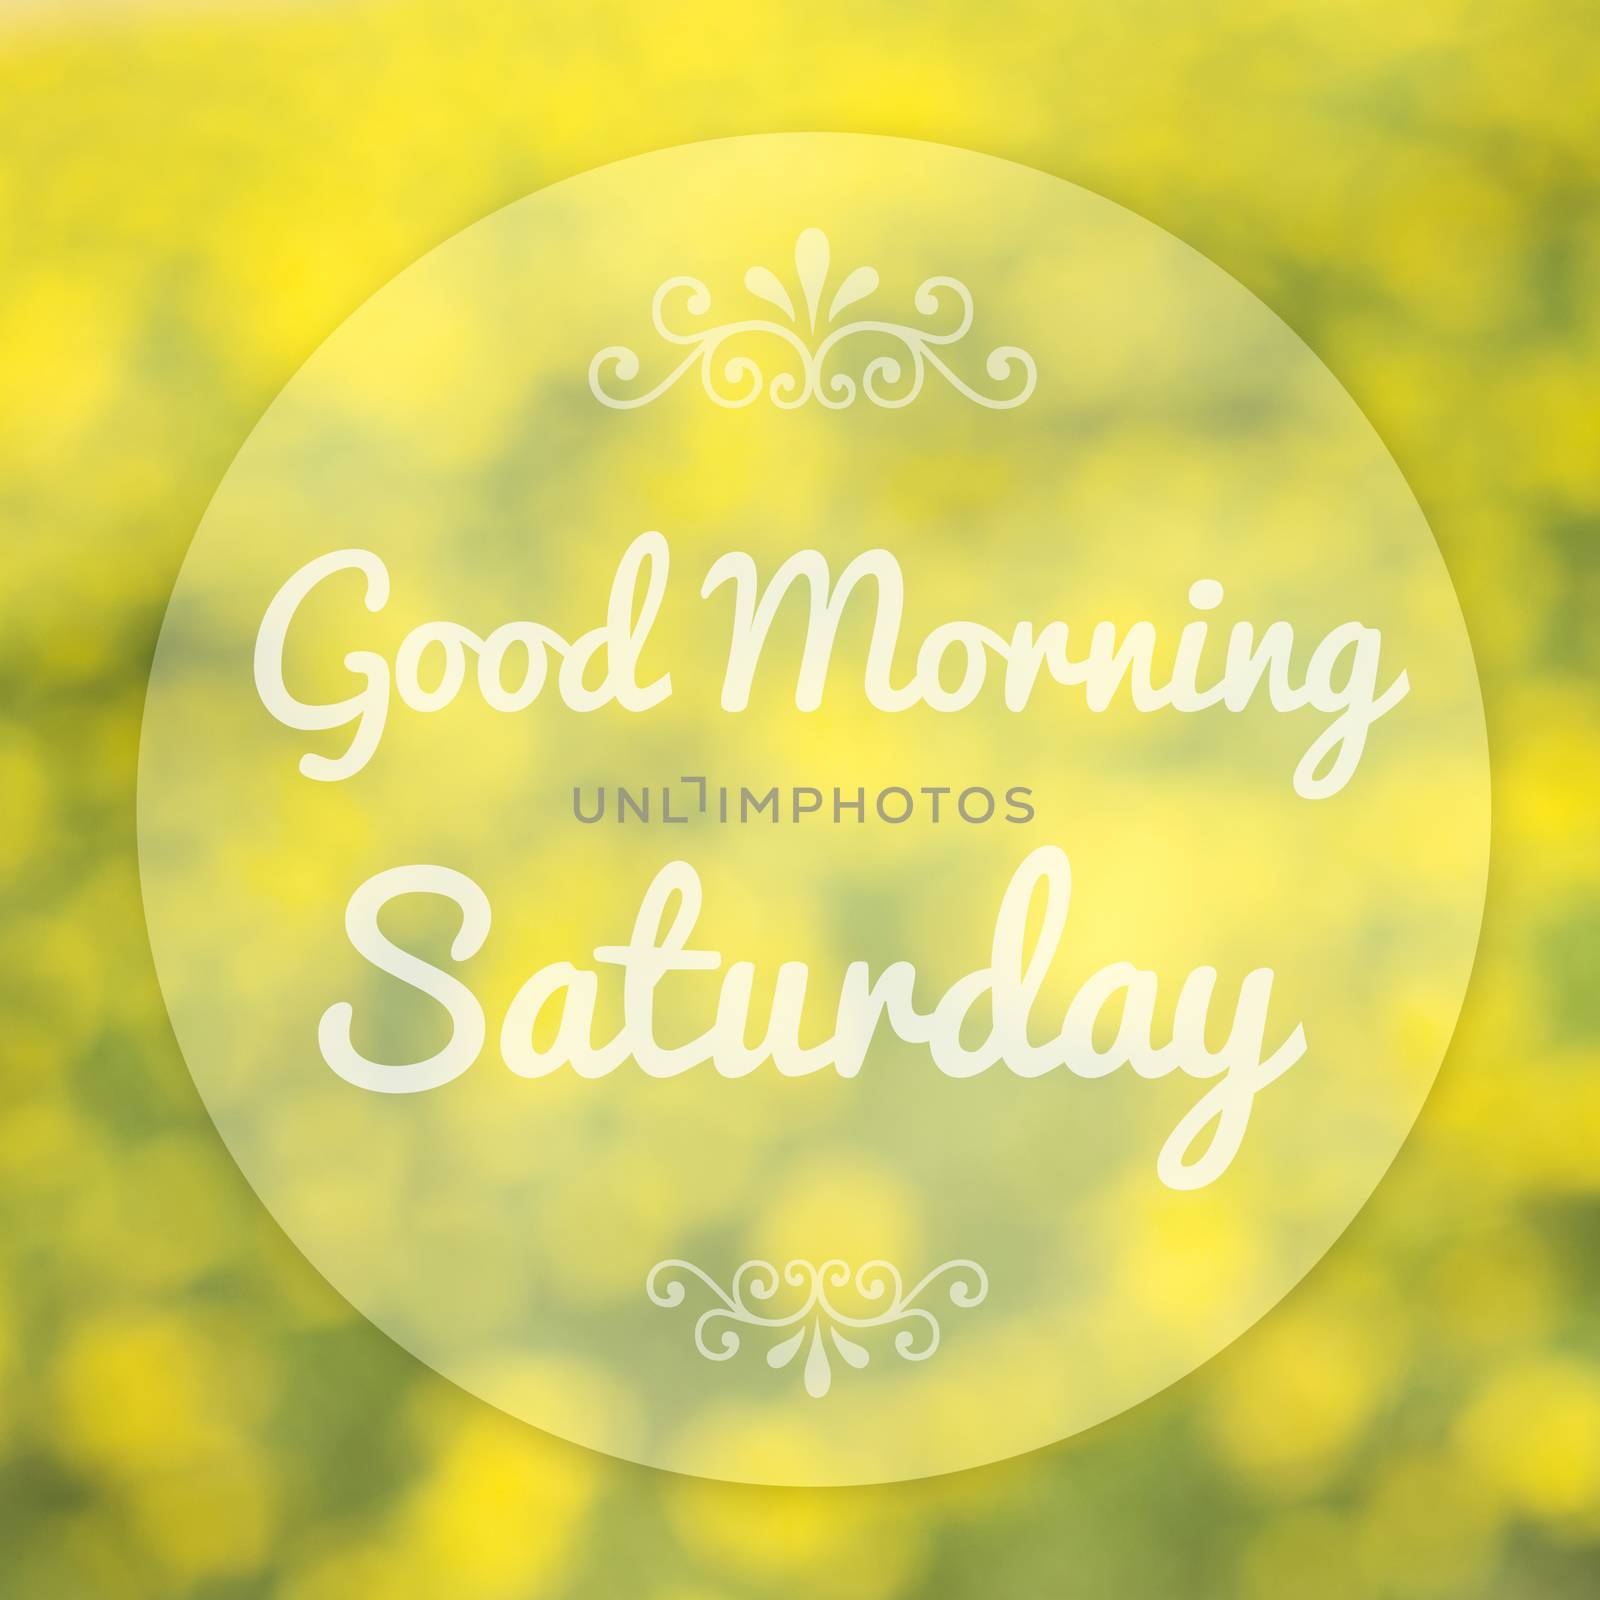 Good Morning Saturday on blur background by 2nix